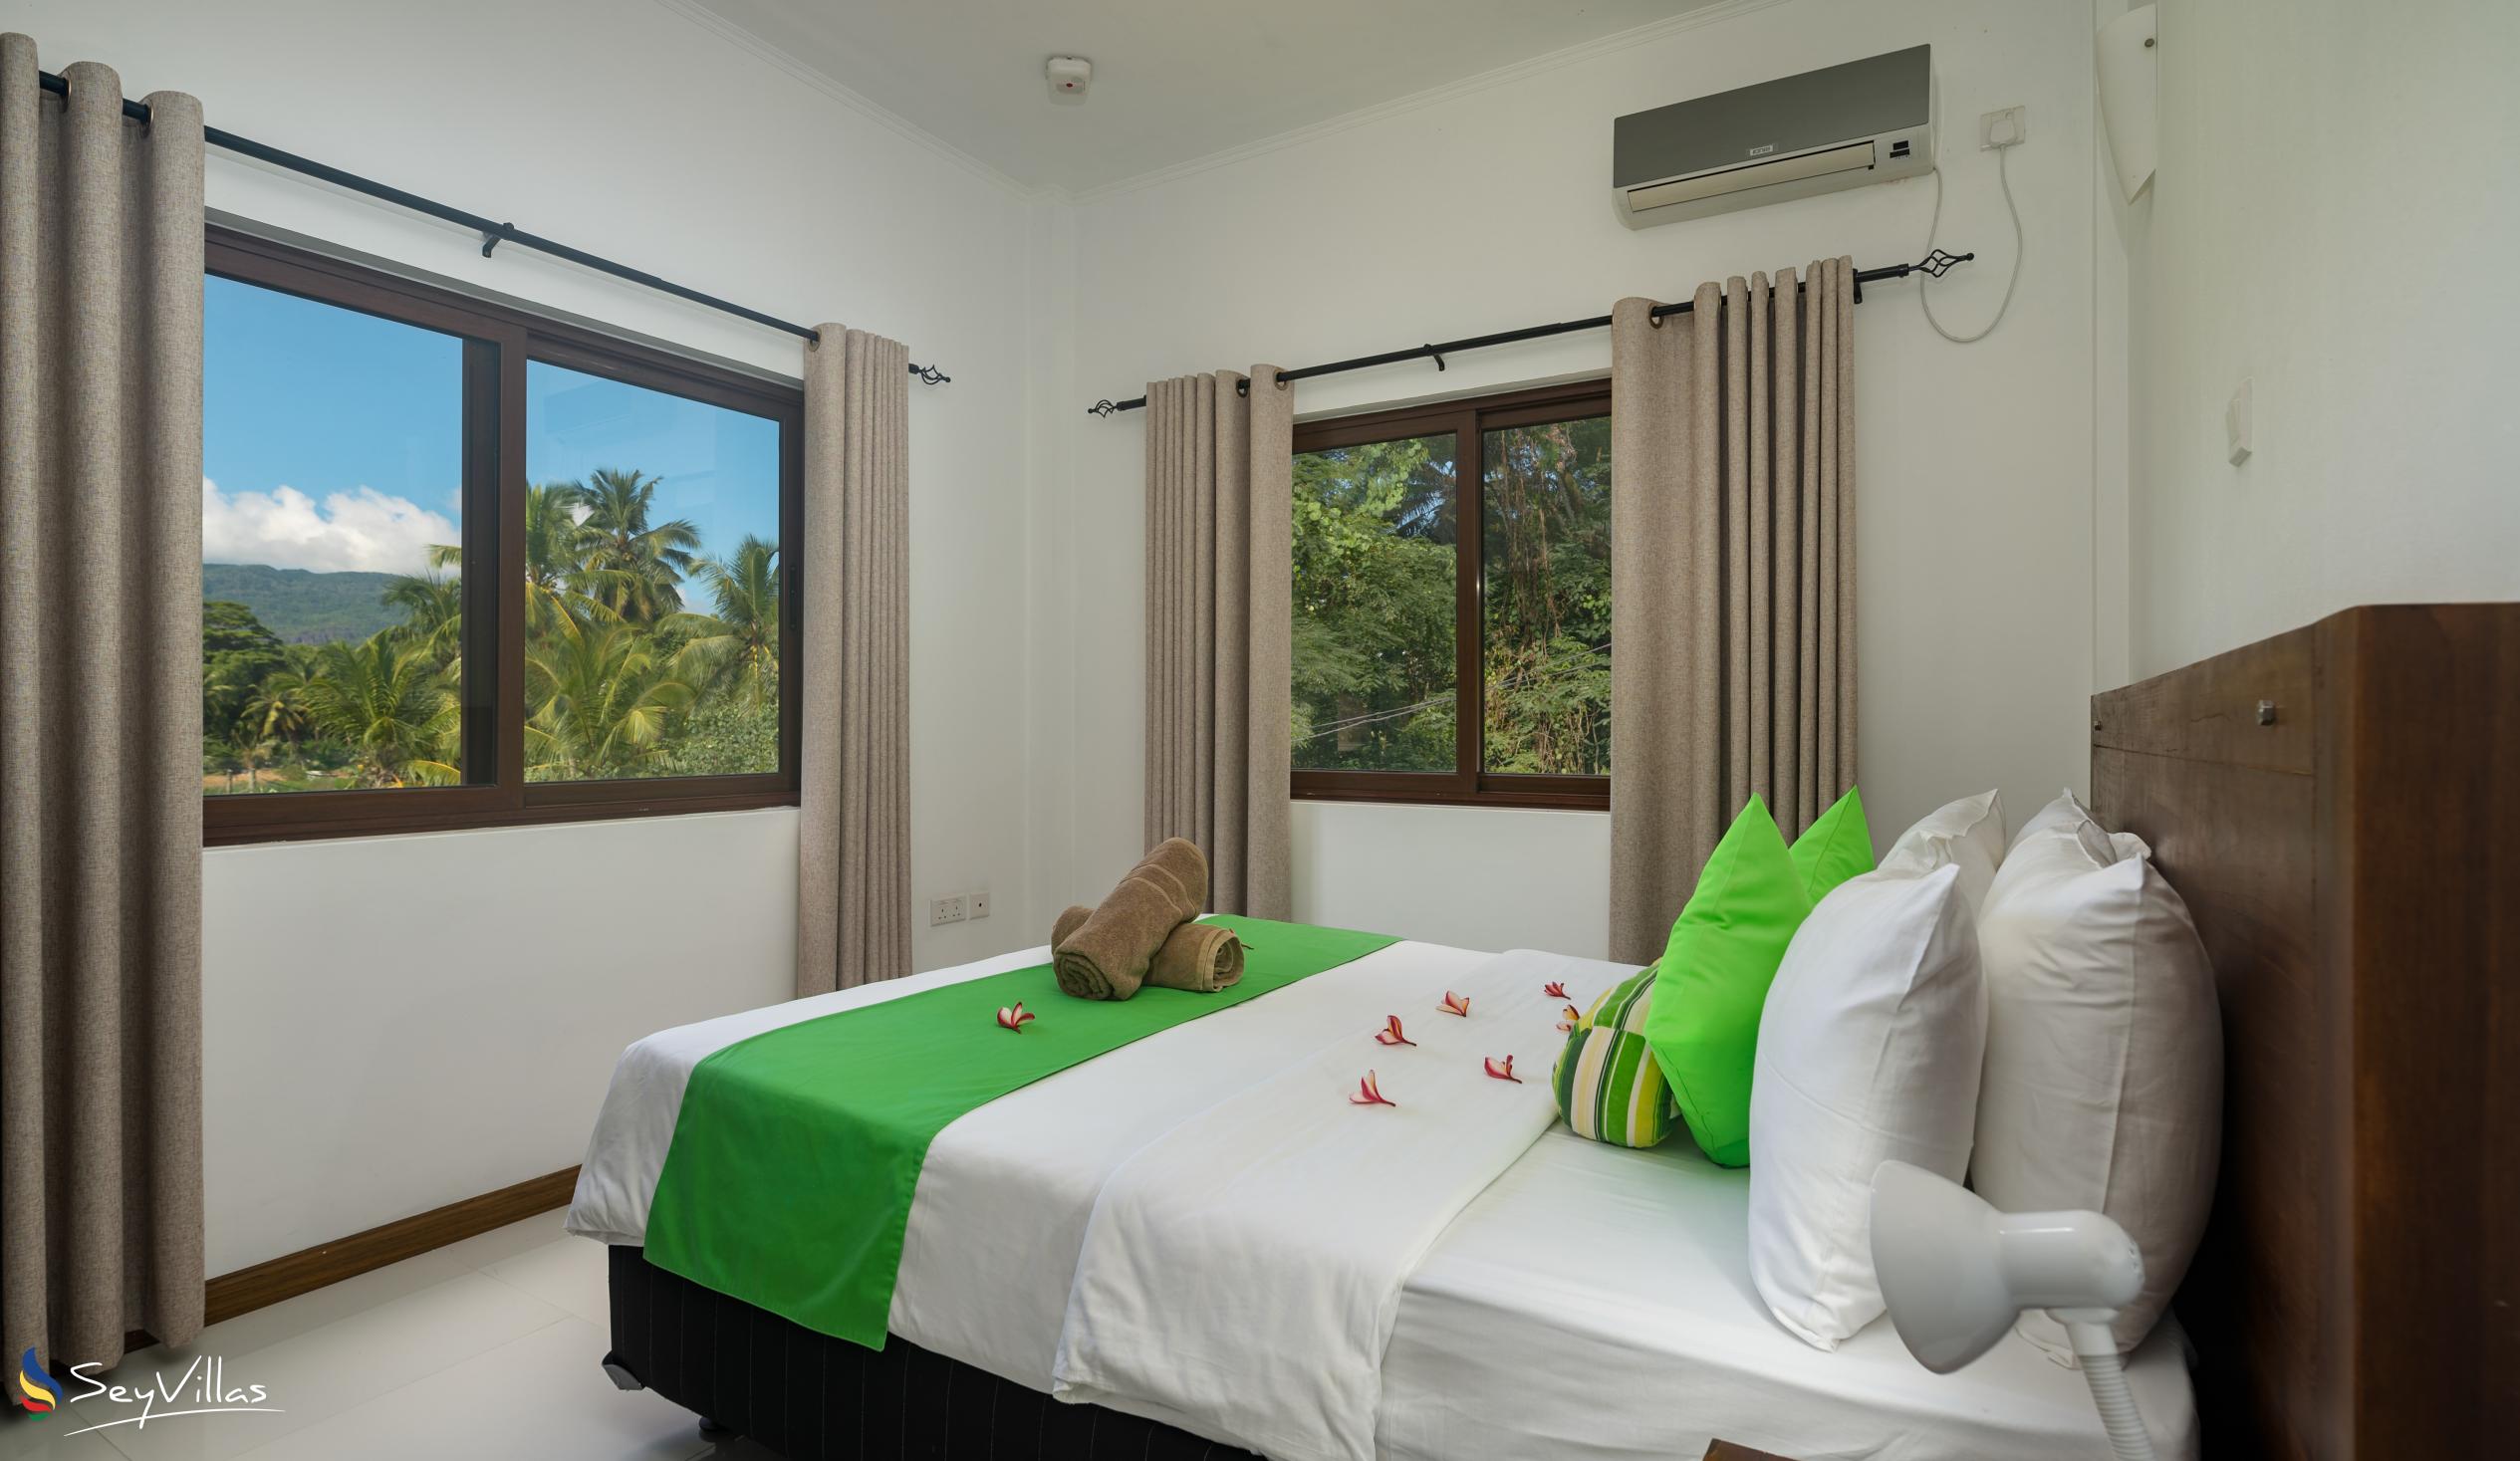 Photo 94: Kanasuk Self Catering Apartments - 2-Bedroom Apartment Lemongrass - Mahé (Seychelles)